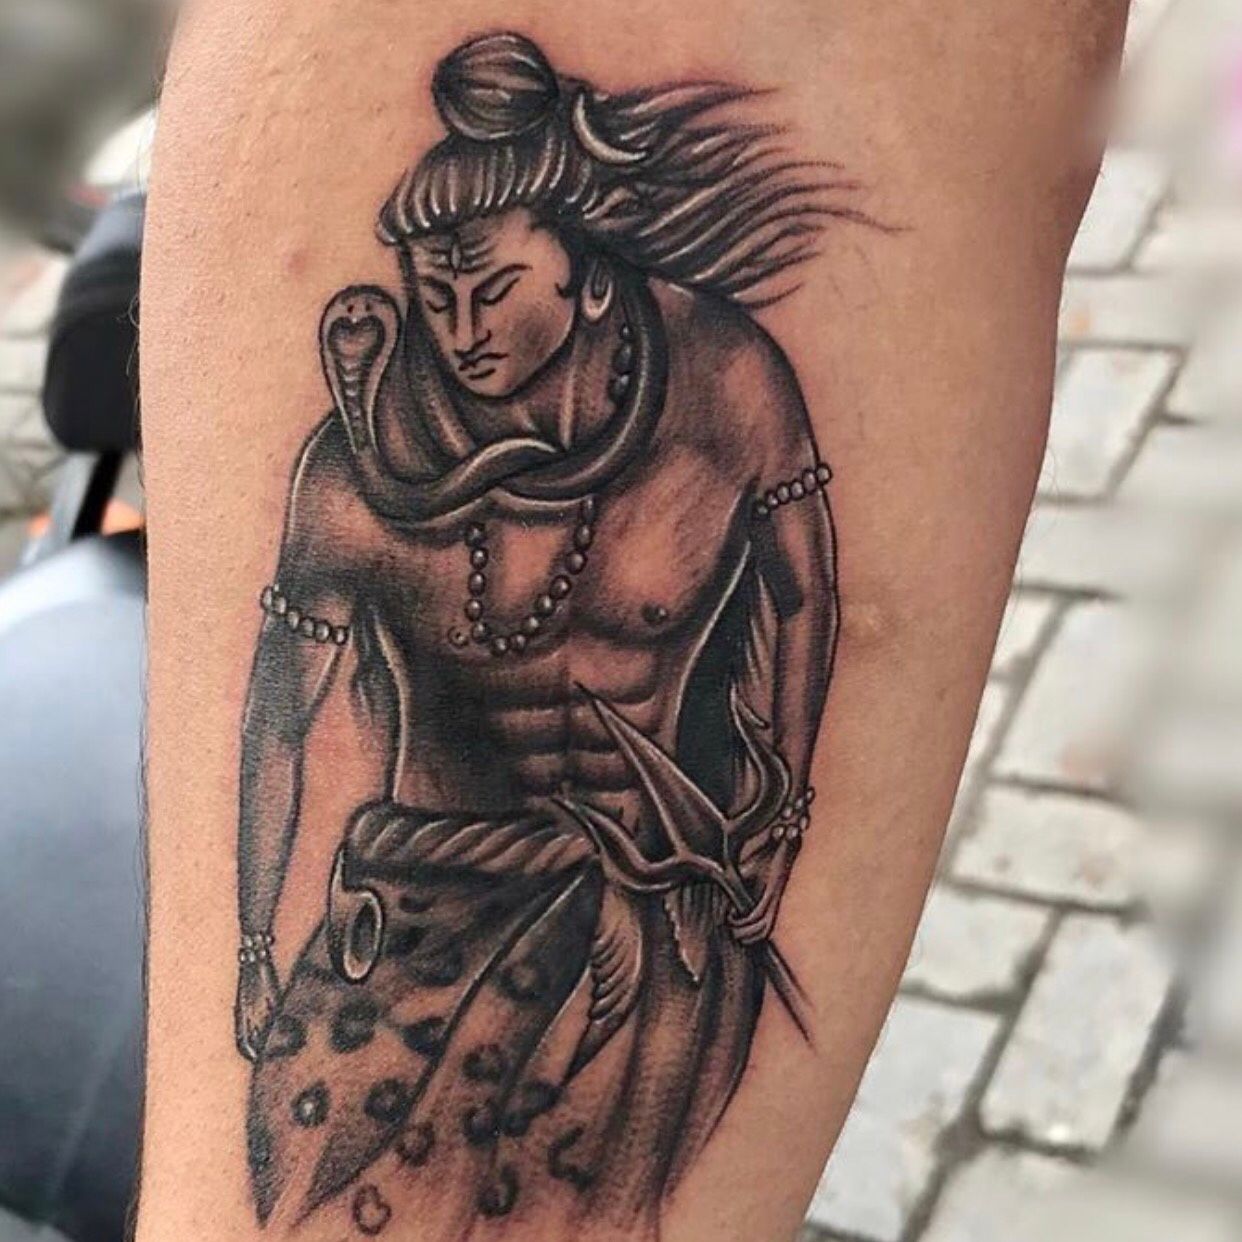 SAVI Full Arm Hand Temporary Tattoo For Men Buddha Shiva Gods Design  For Girls Women Tattoo Sticker Size 48x17CM  1PC  Amazonin Beauty